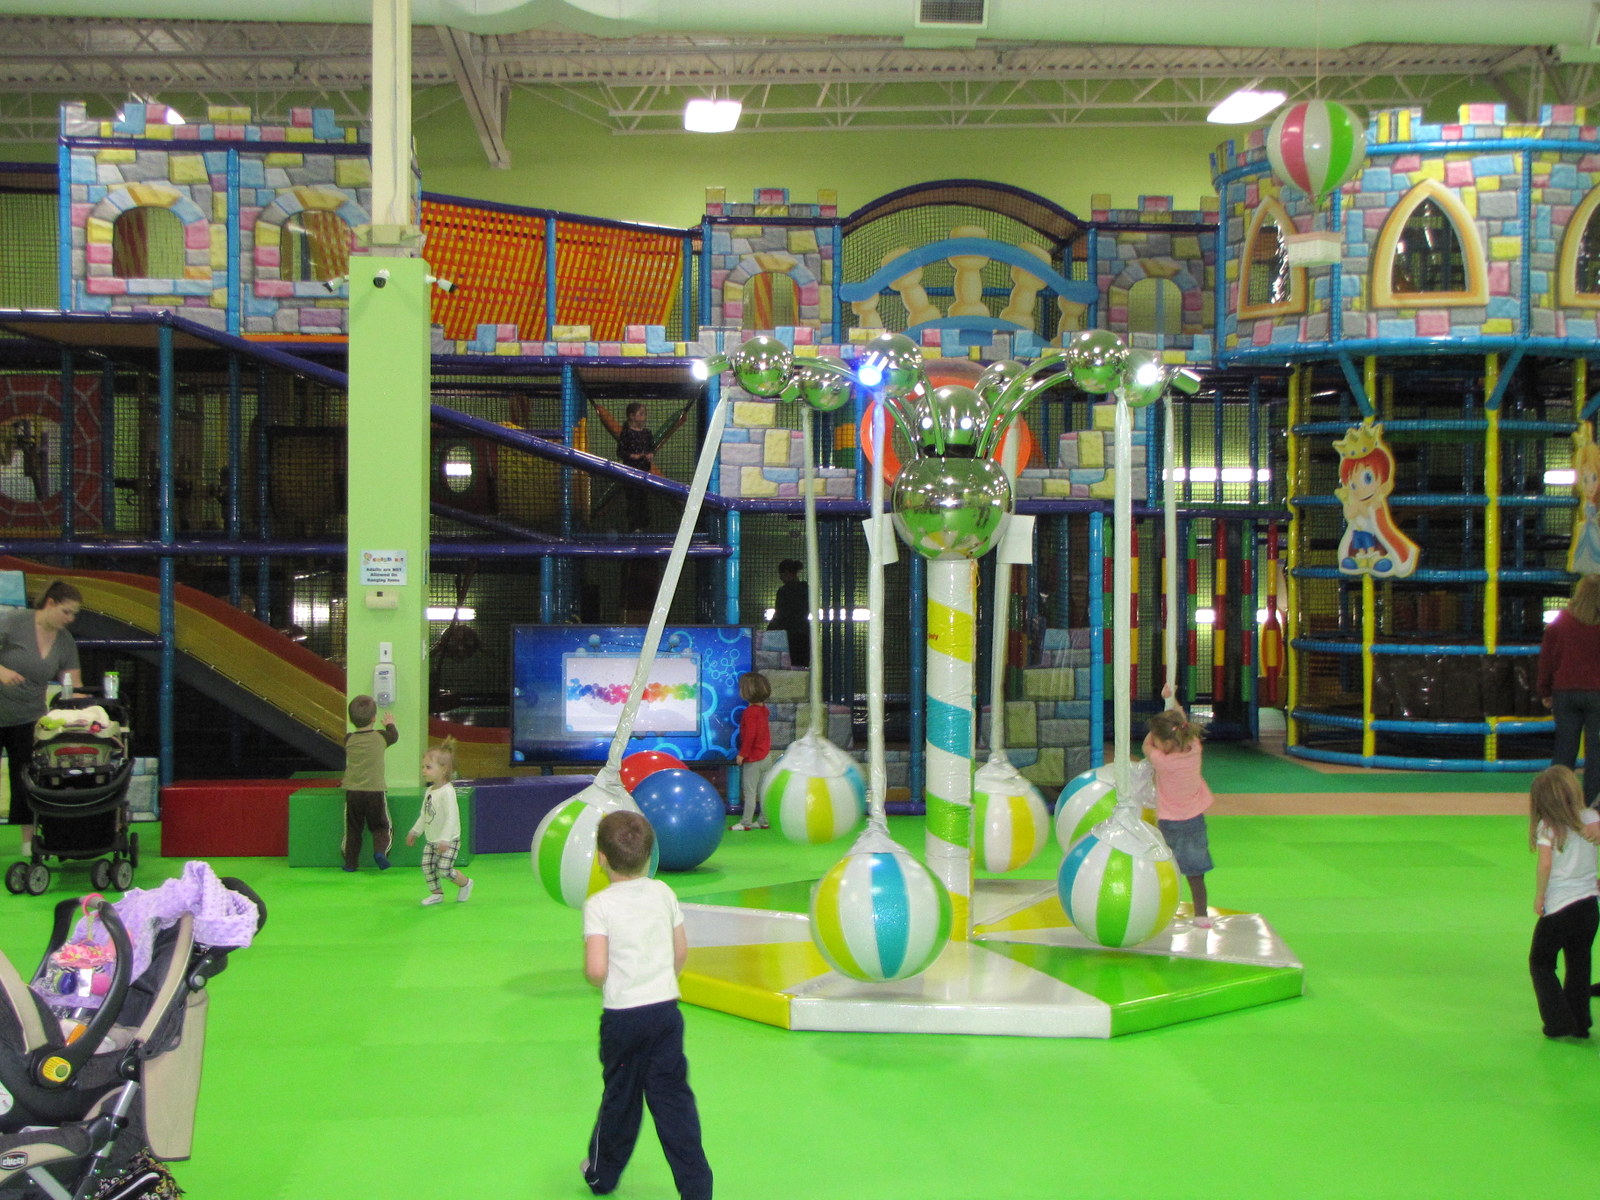 Catch Air Indoor Play Center Now Open in Grand Rapids - grkids.com